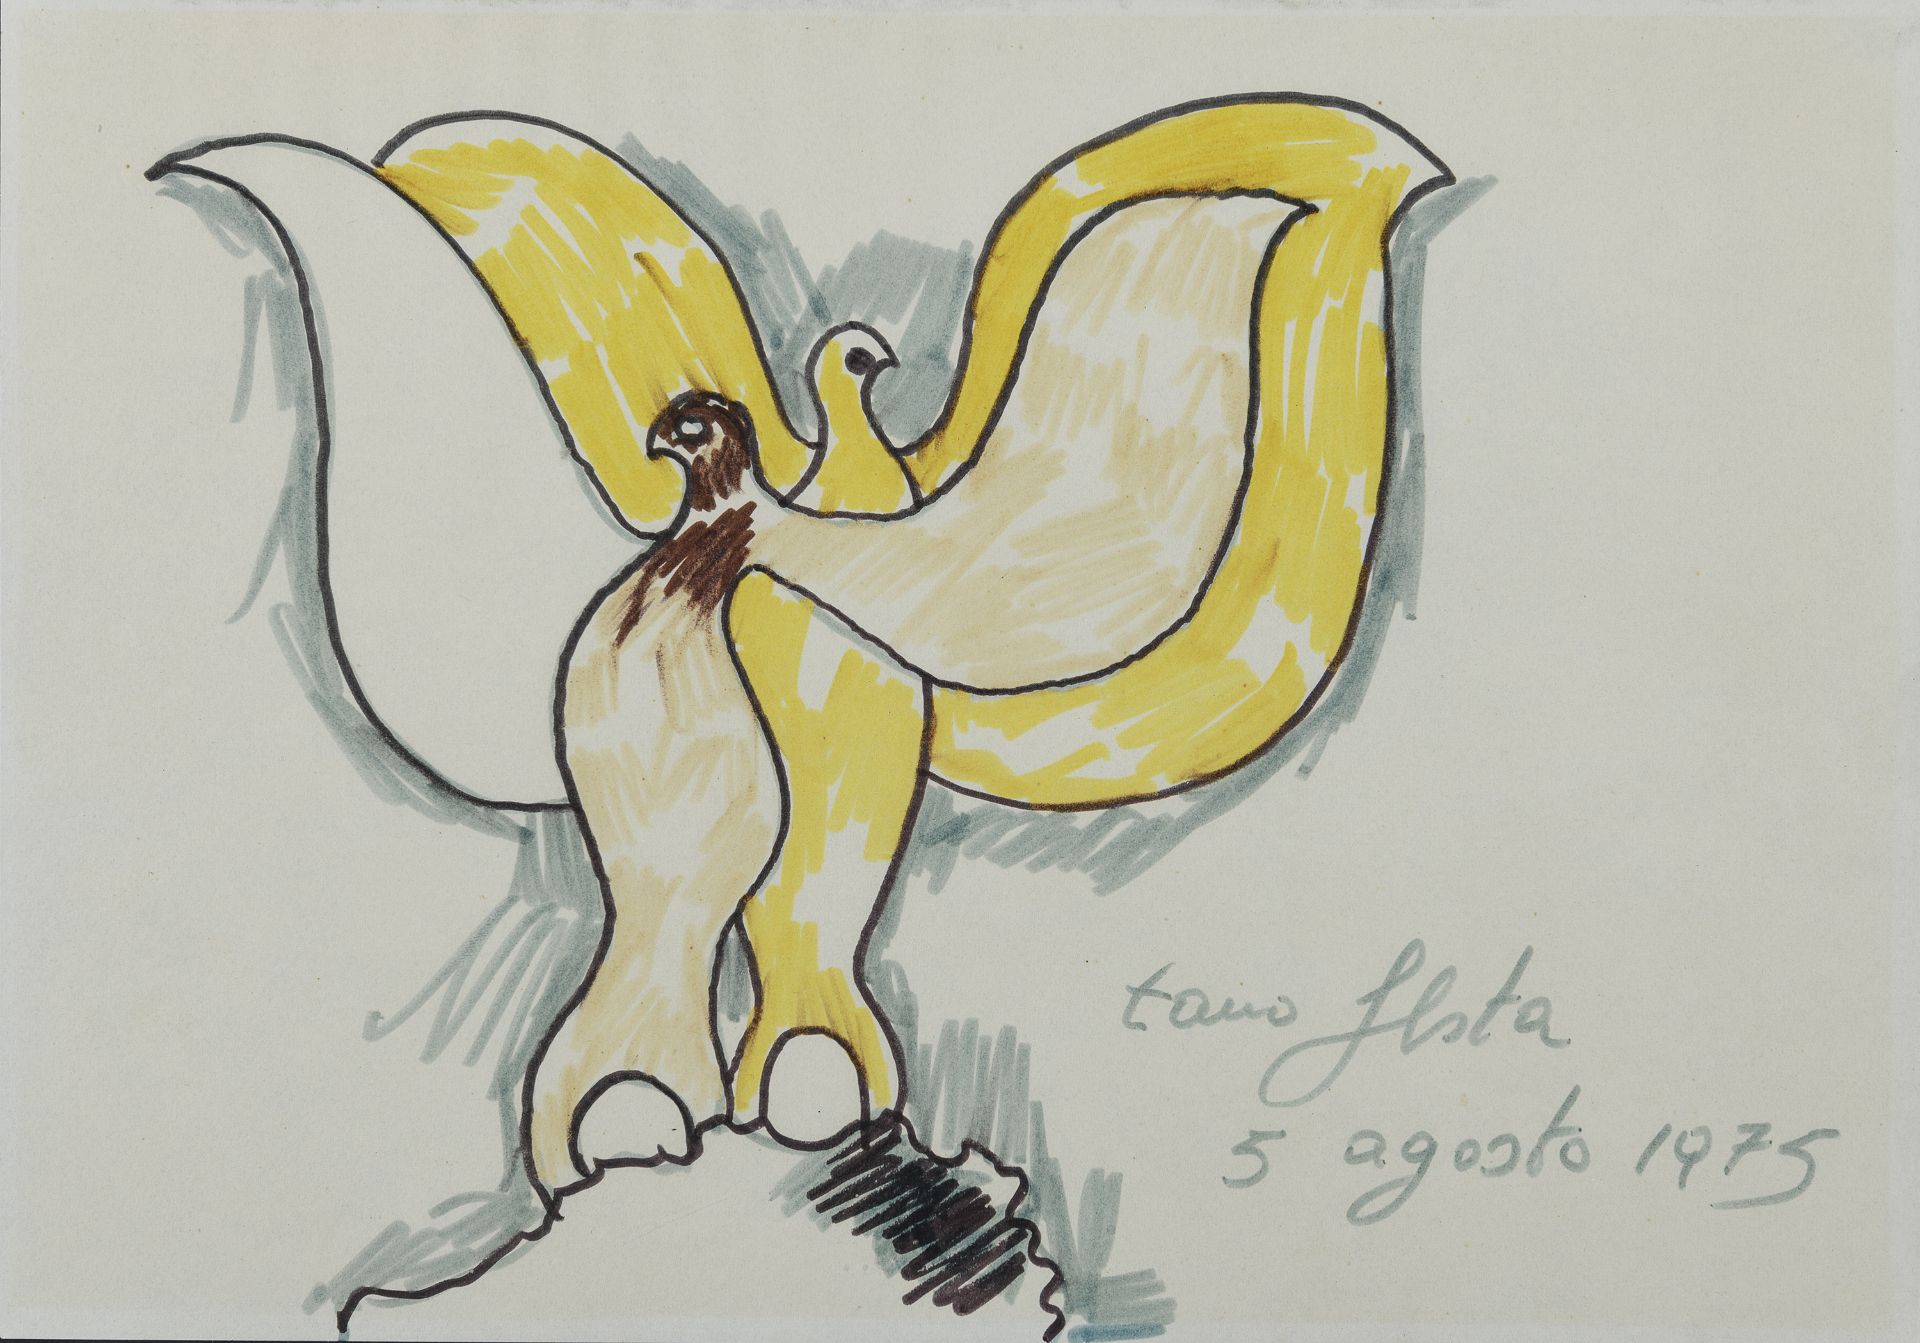 FELT PEN DRAWING OF EAGLES BY TANO FESTA 1975